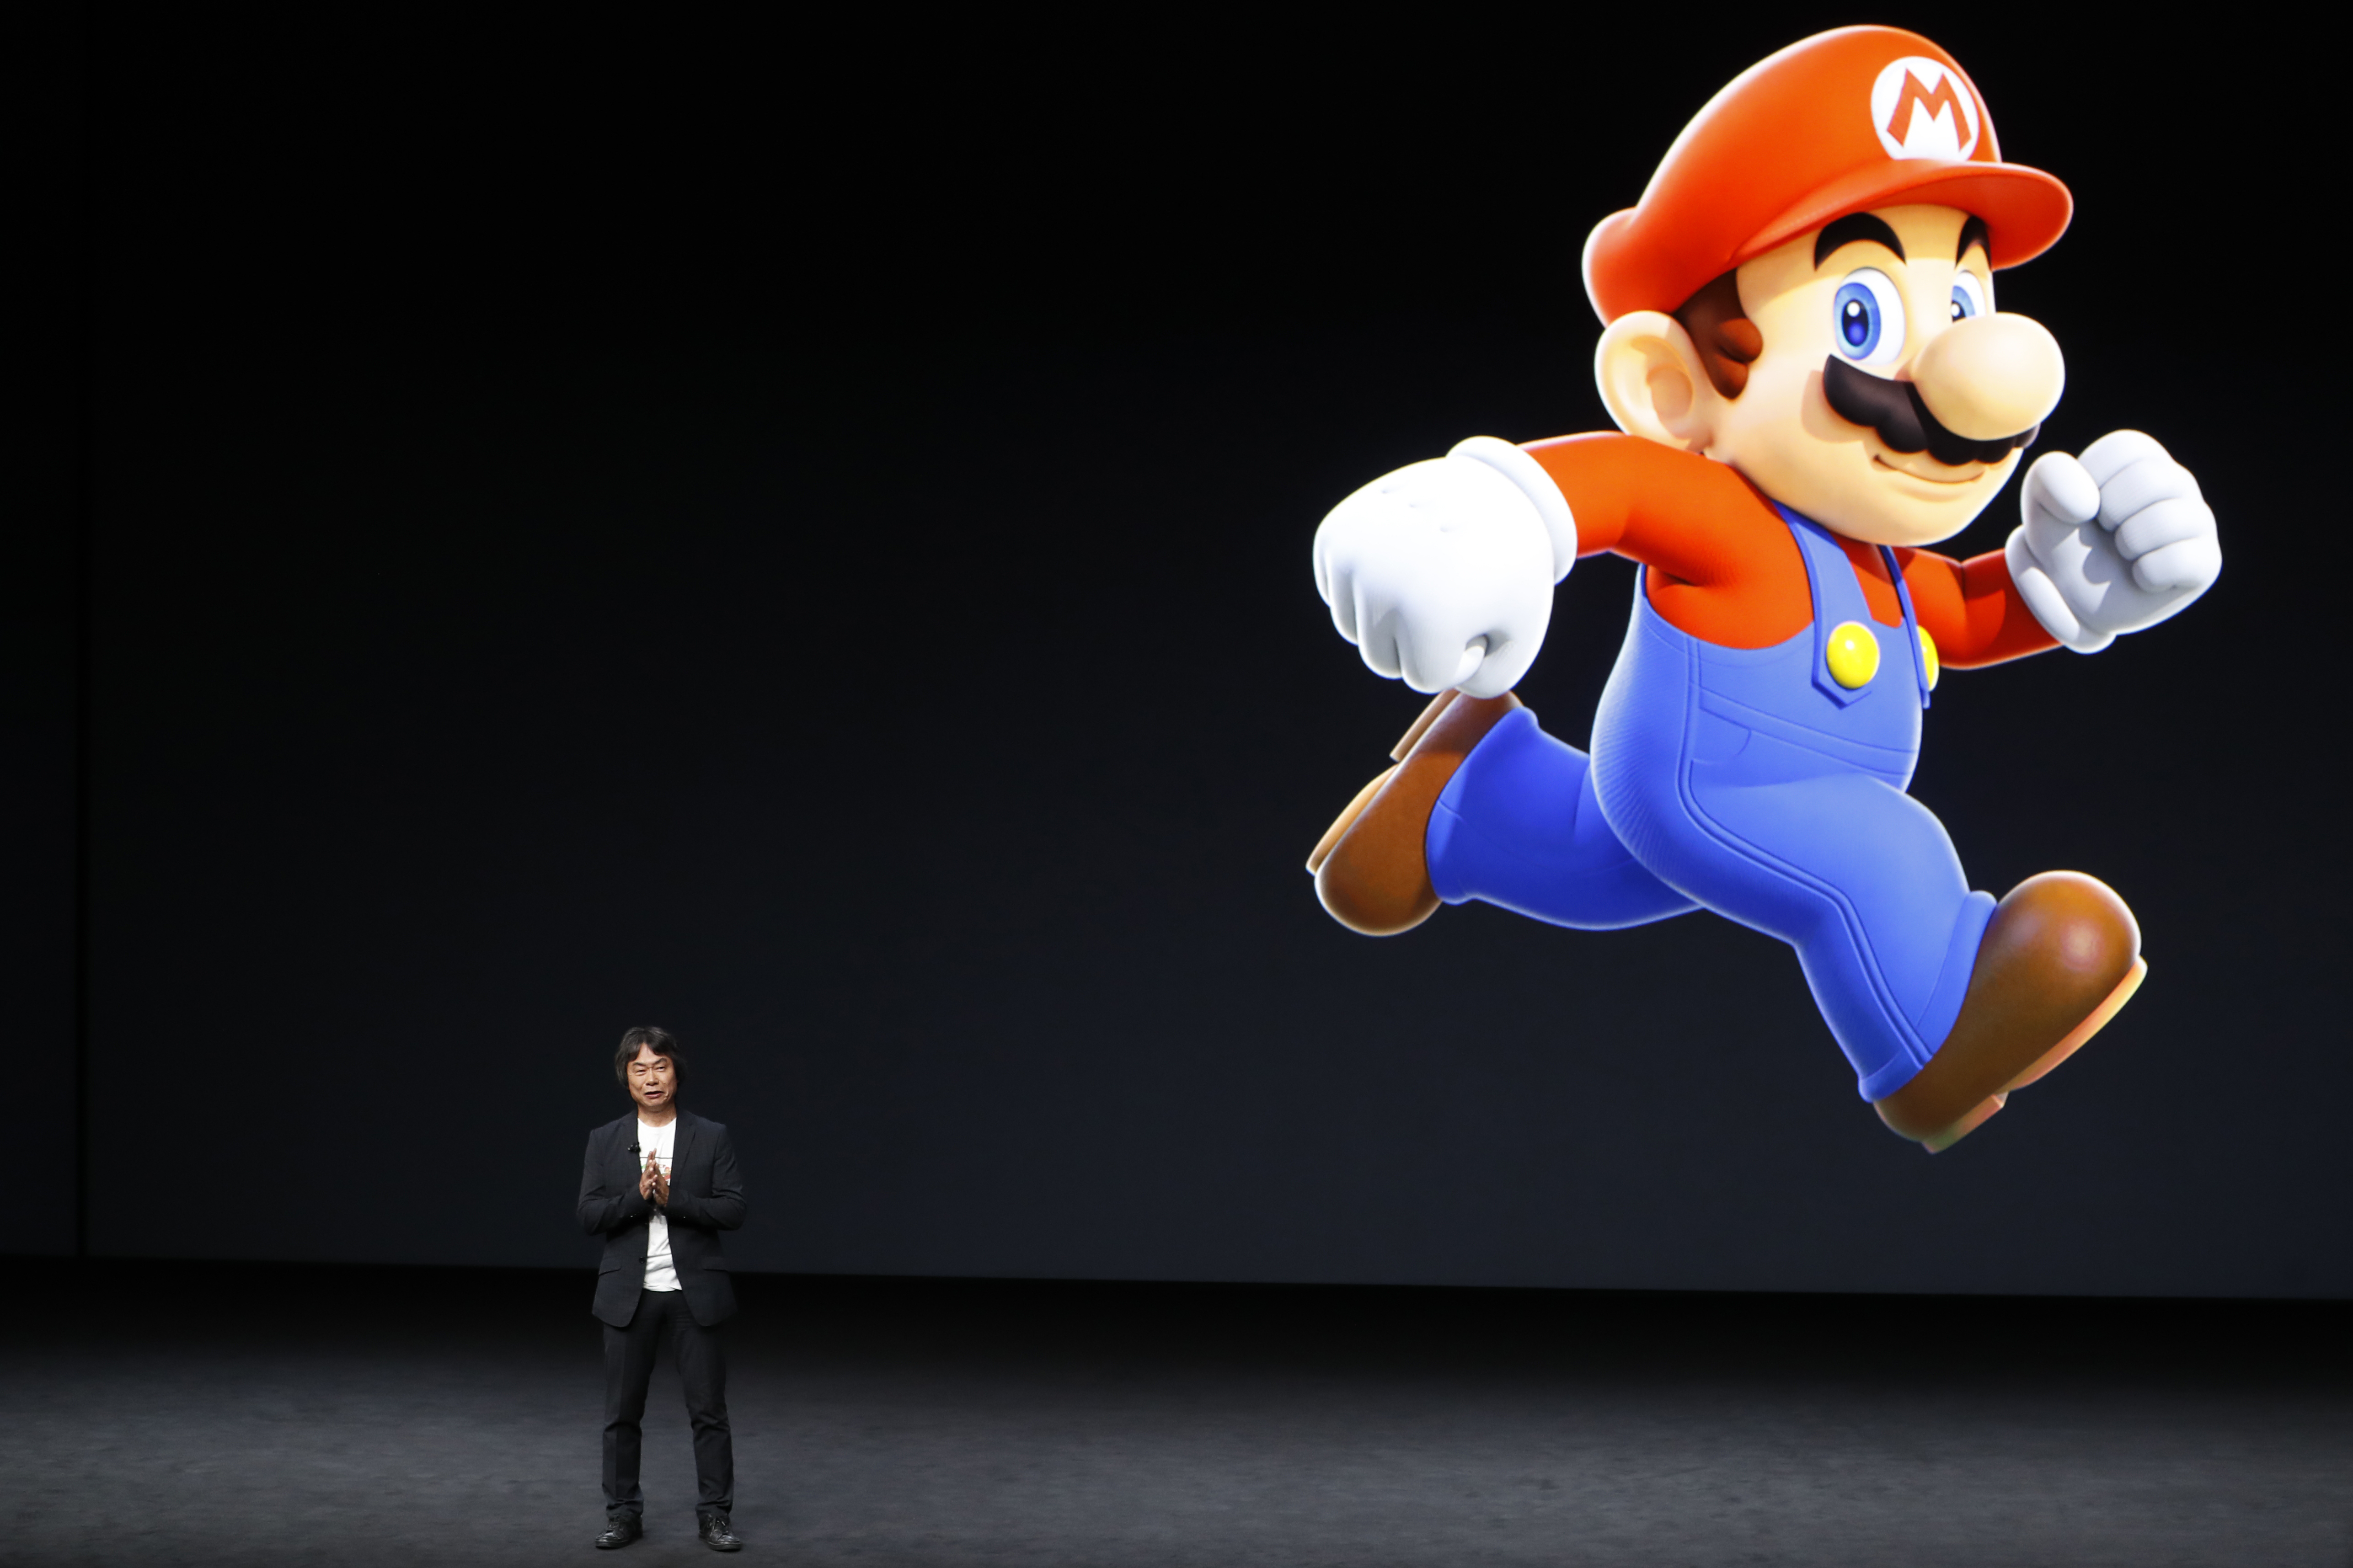 Shigeru Miyamoto Shares A Special Message At The Nintendo Switch